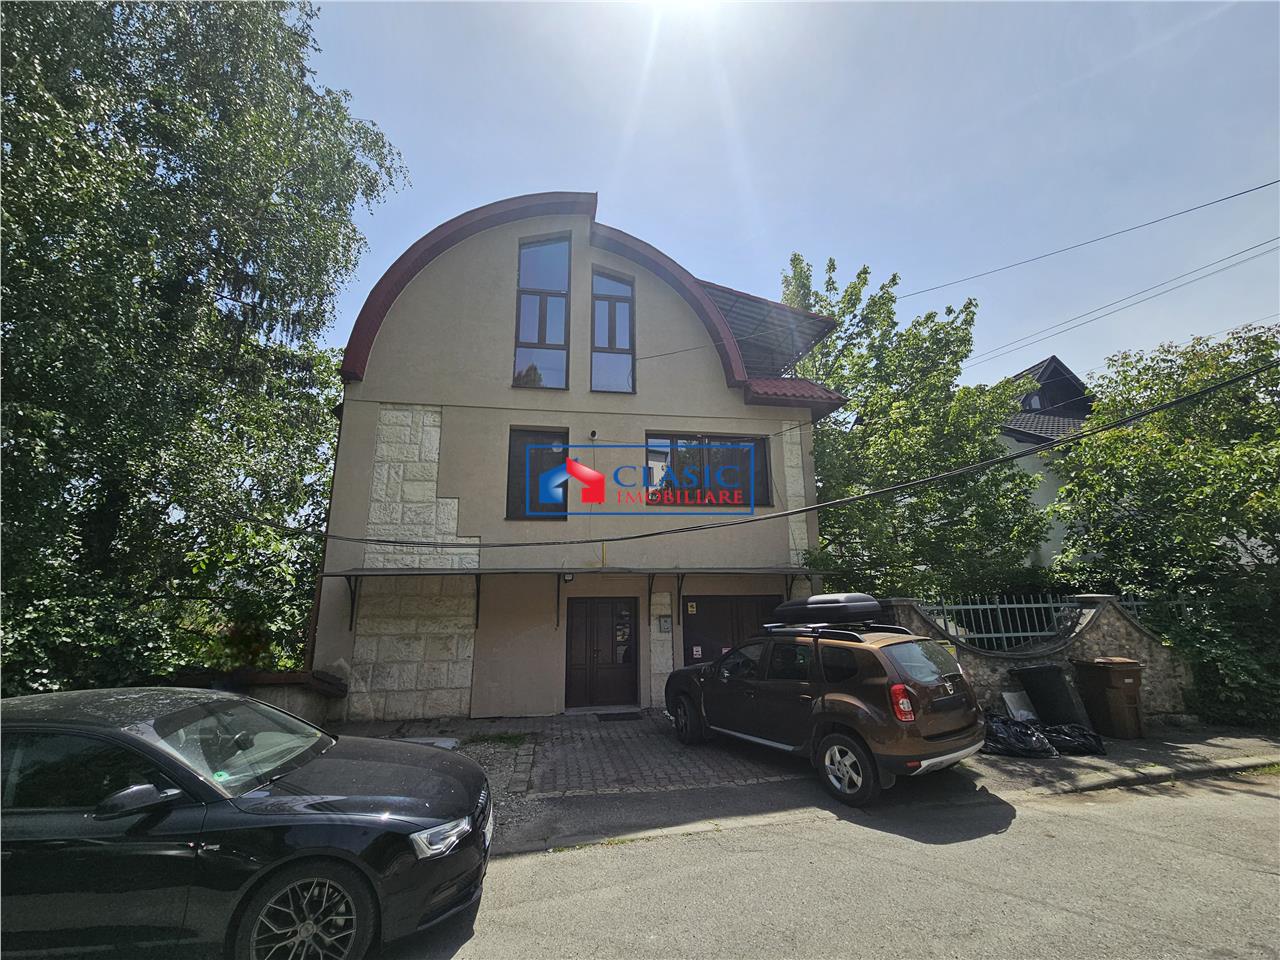 Inchiriere casa individuala, locuinta sau birouri, 320 mp utili zona Grigorescu, Cluj-Napoca